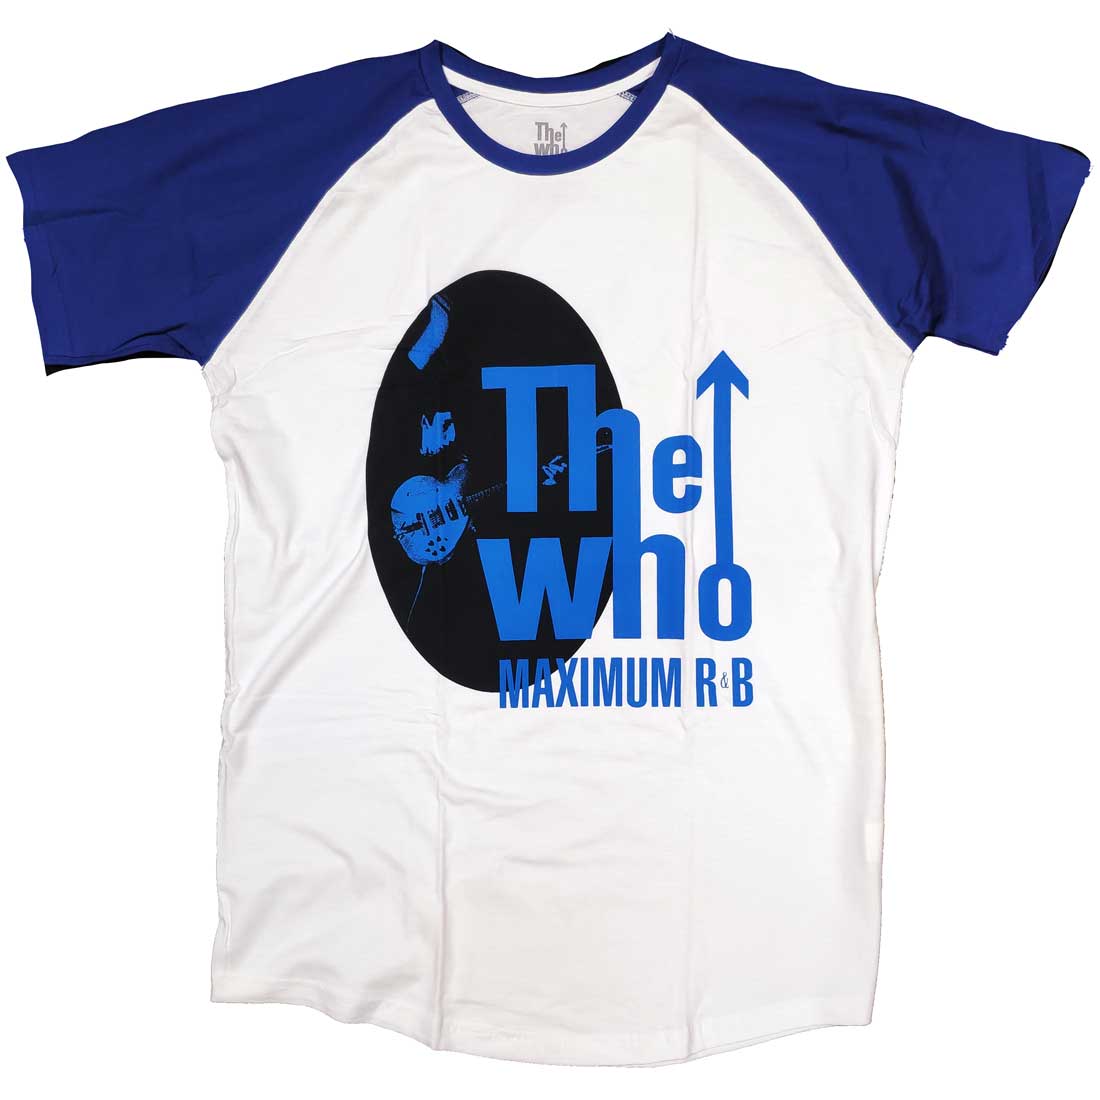 The Who T Shirt - Maximum RnB Baseball Shirt 100% Official